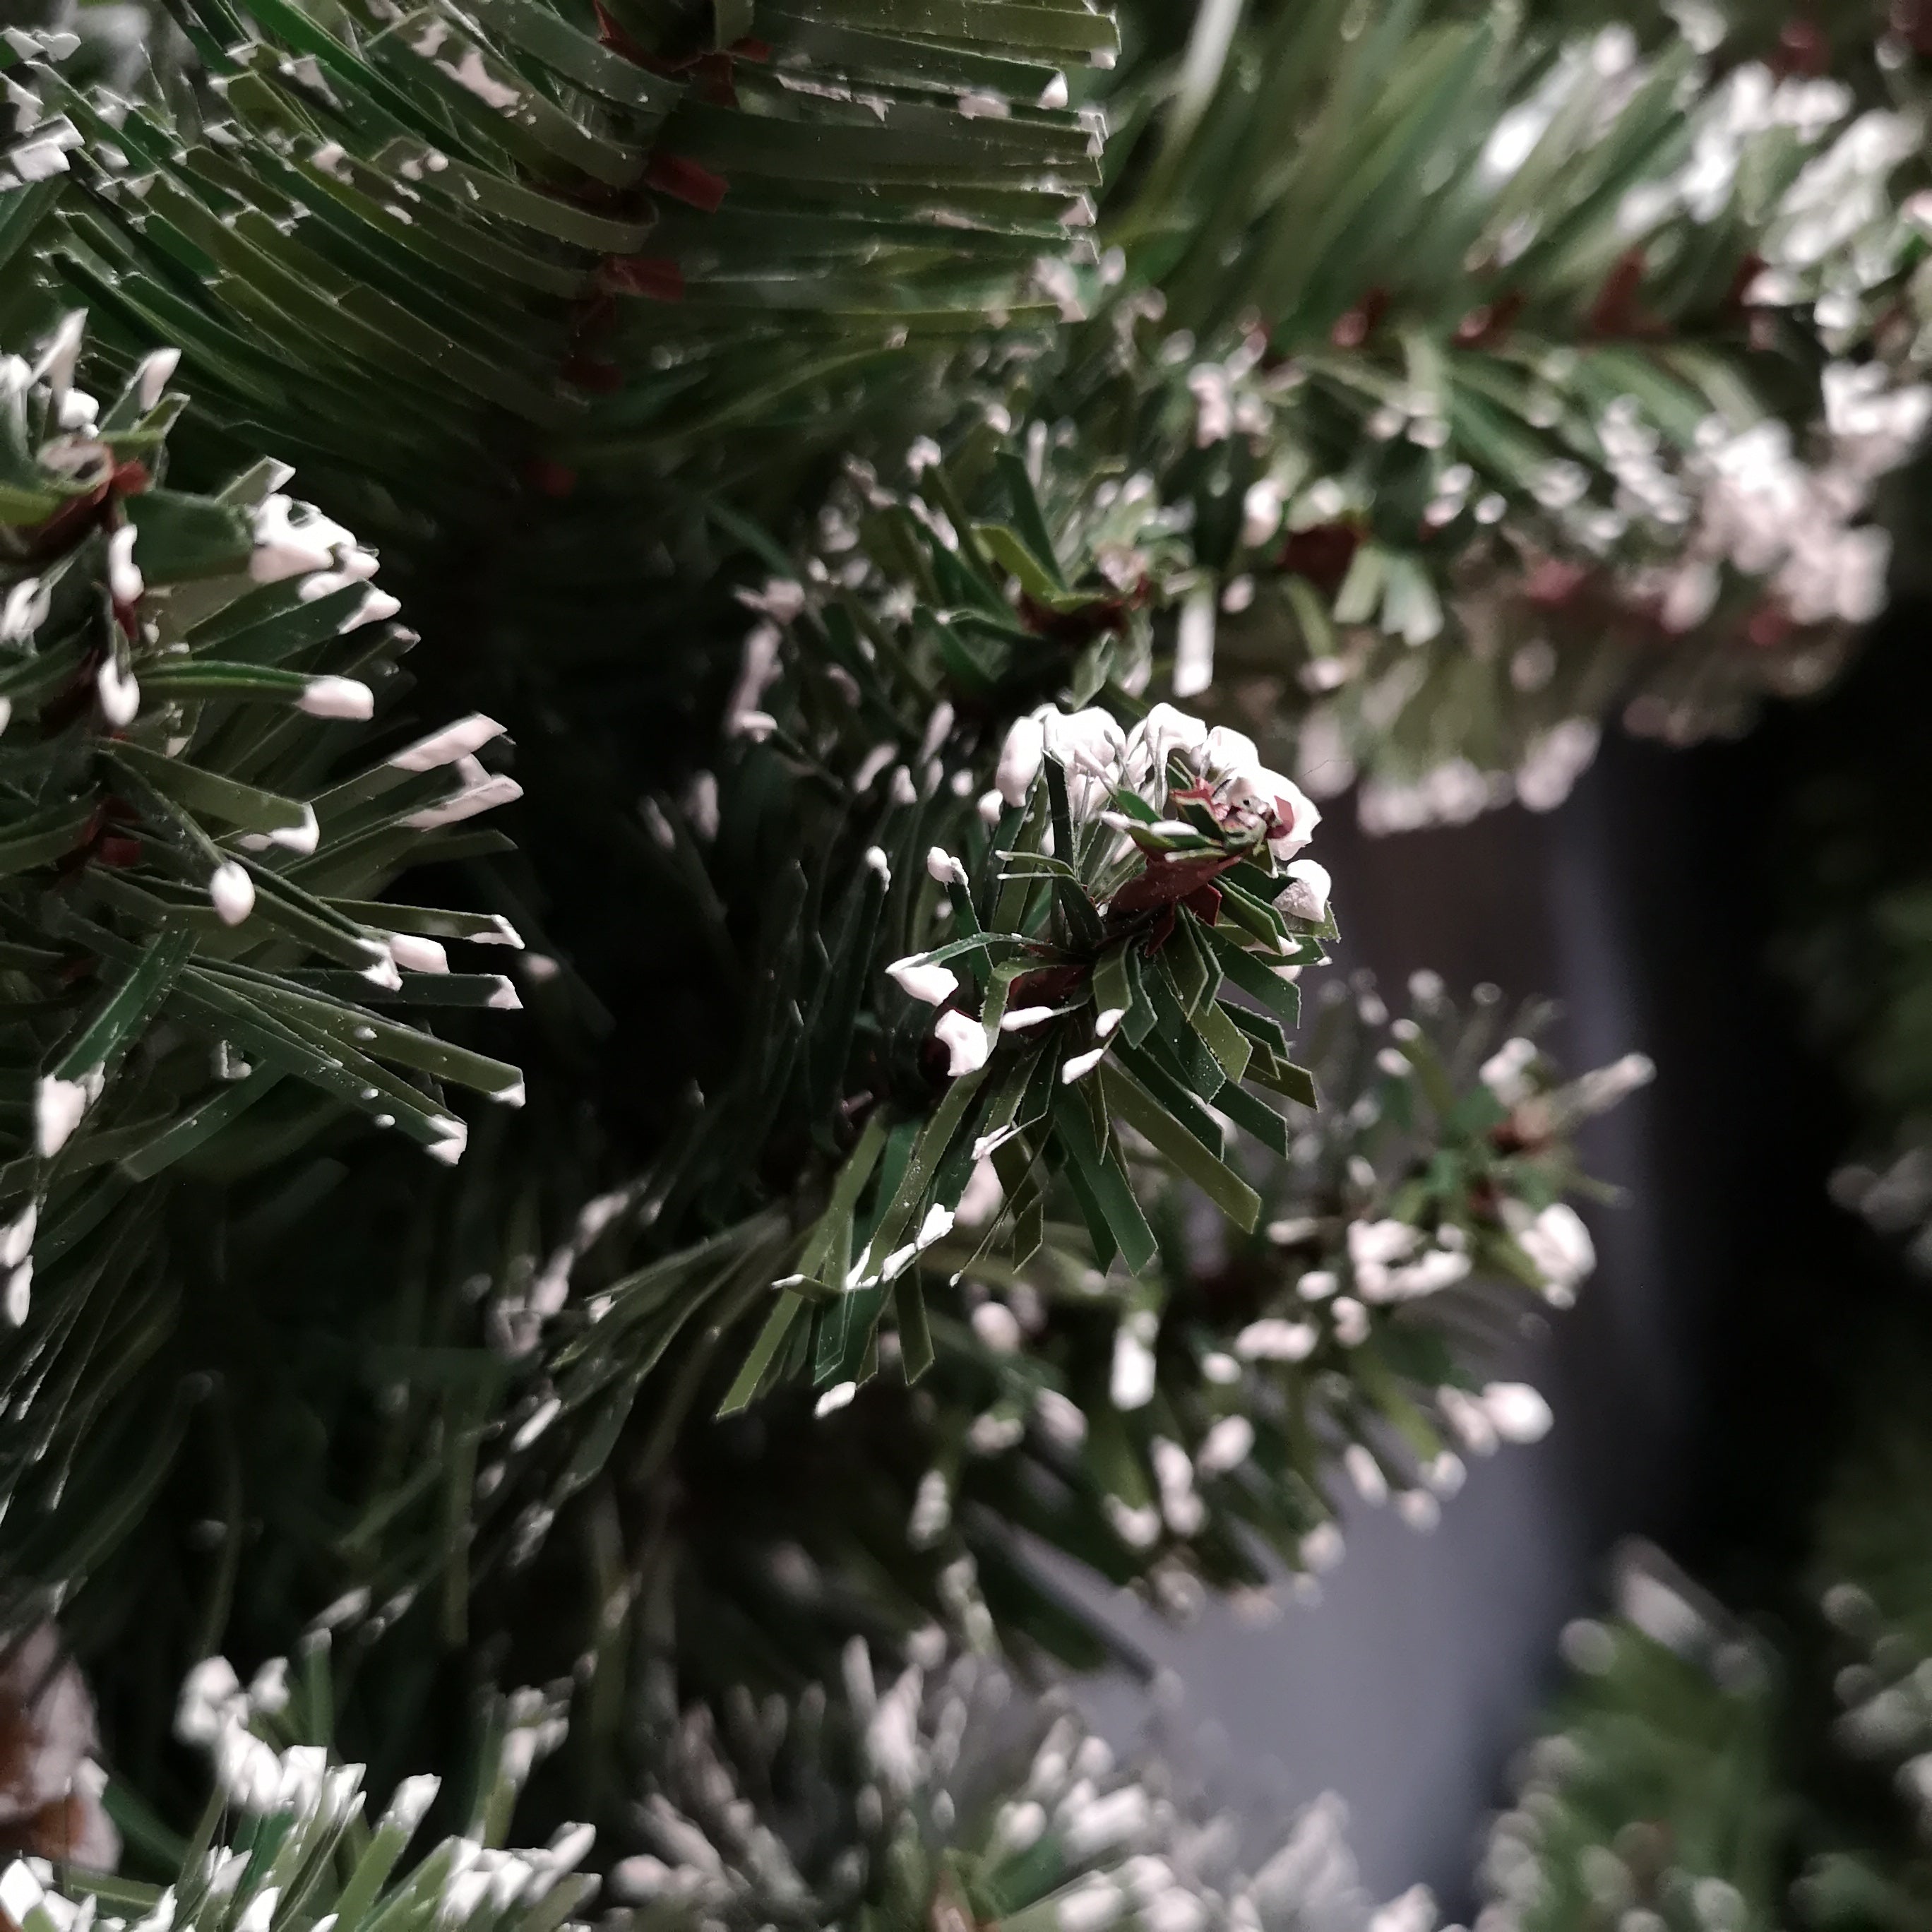 Premier Rocky Mountain Snow Tipped Christmas Wreath 50cm